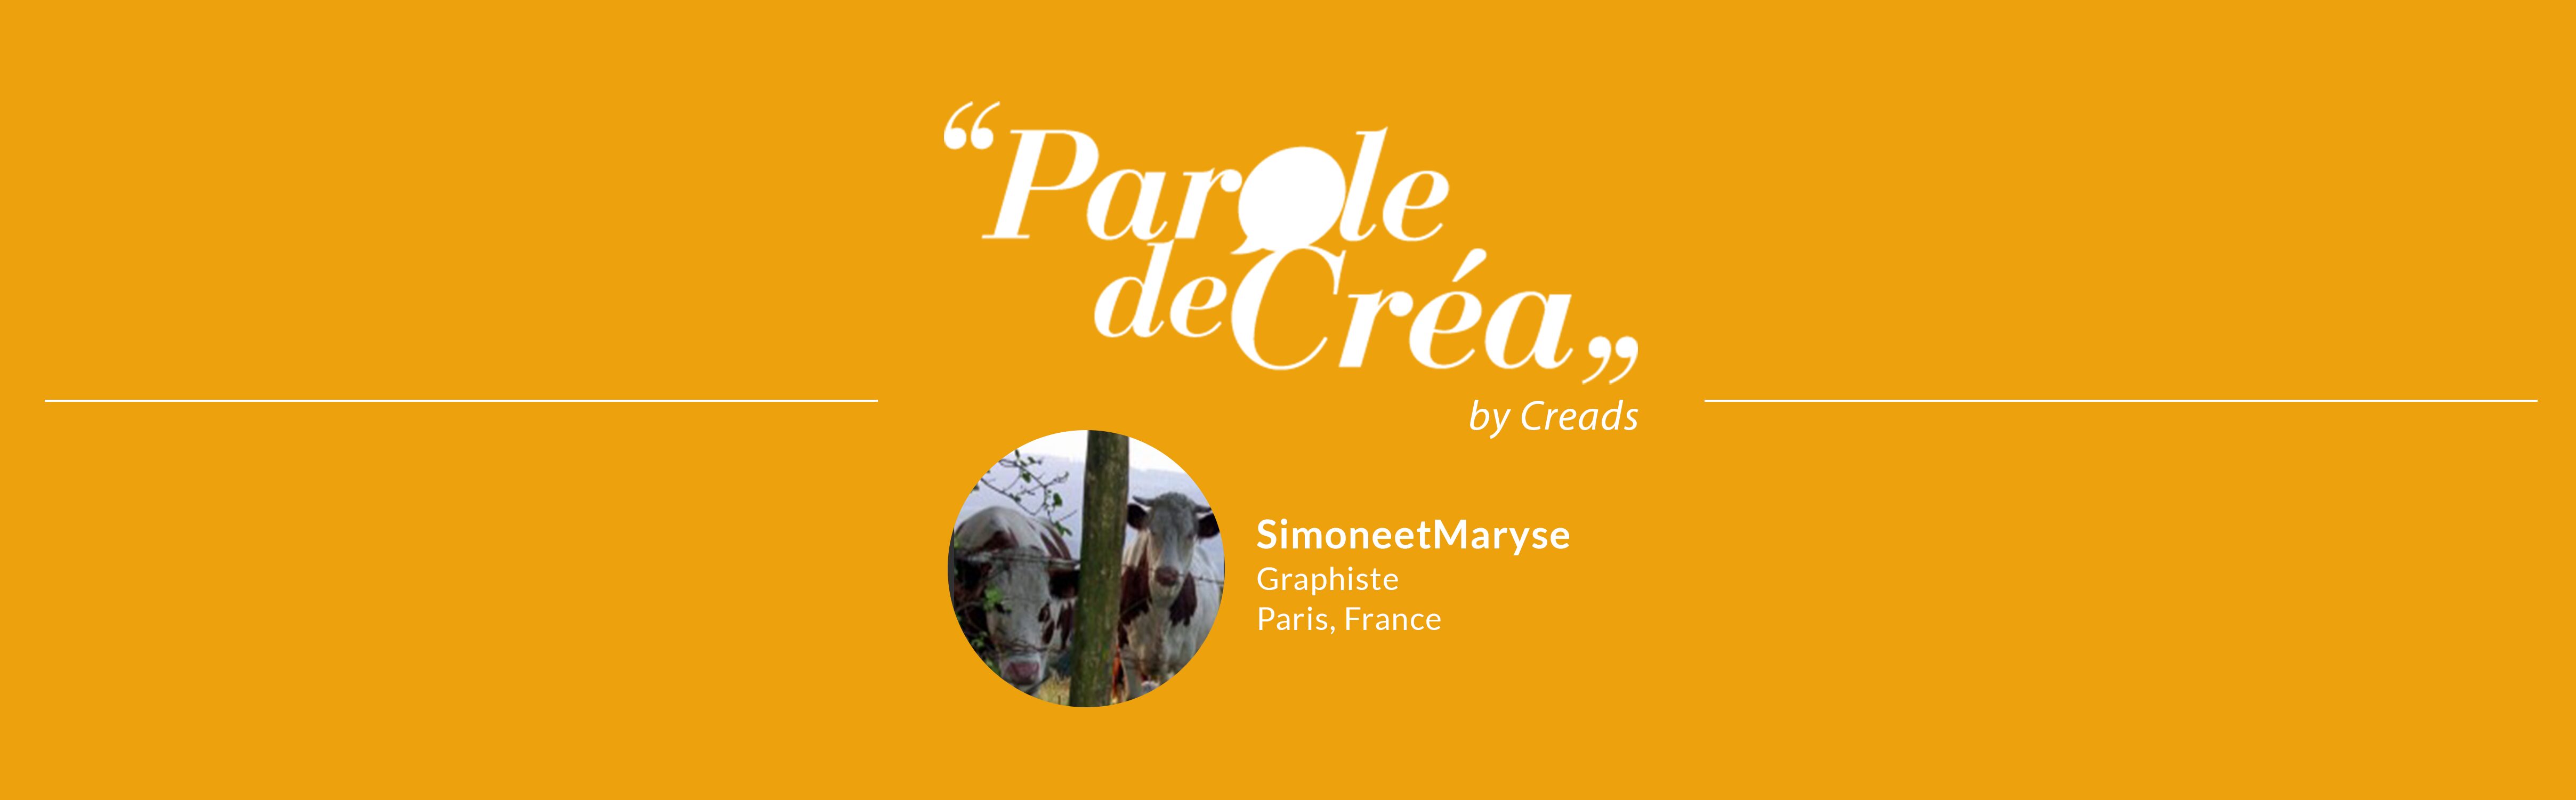 SimoneetMaryse Graphiste Freelance France